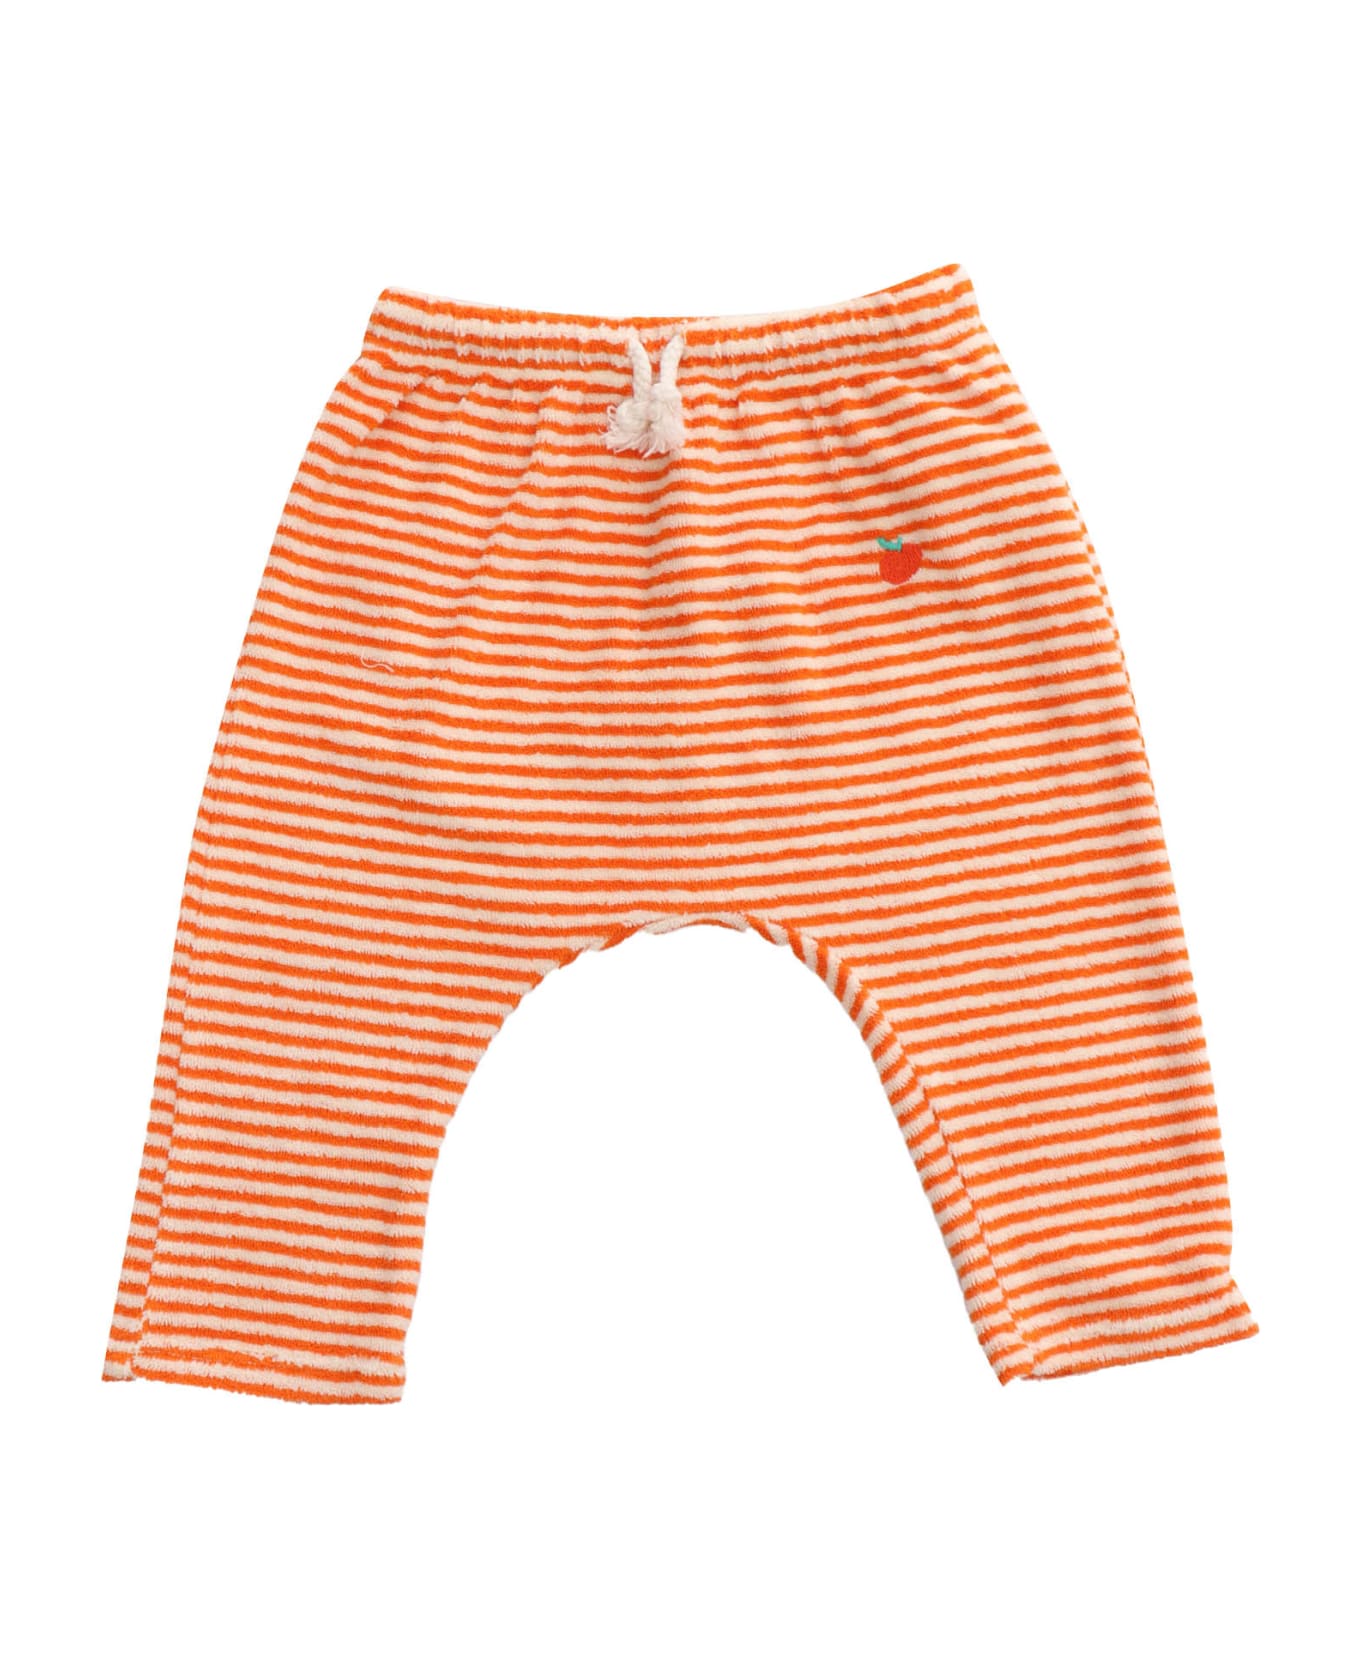 Bobo Choses Pantaloni Arancioni Da Neonato - ORANGE ボトムス